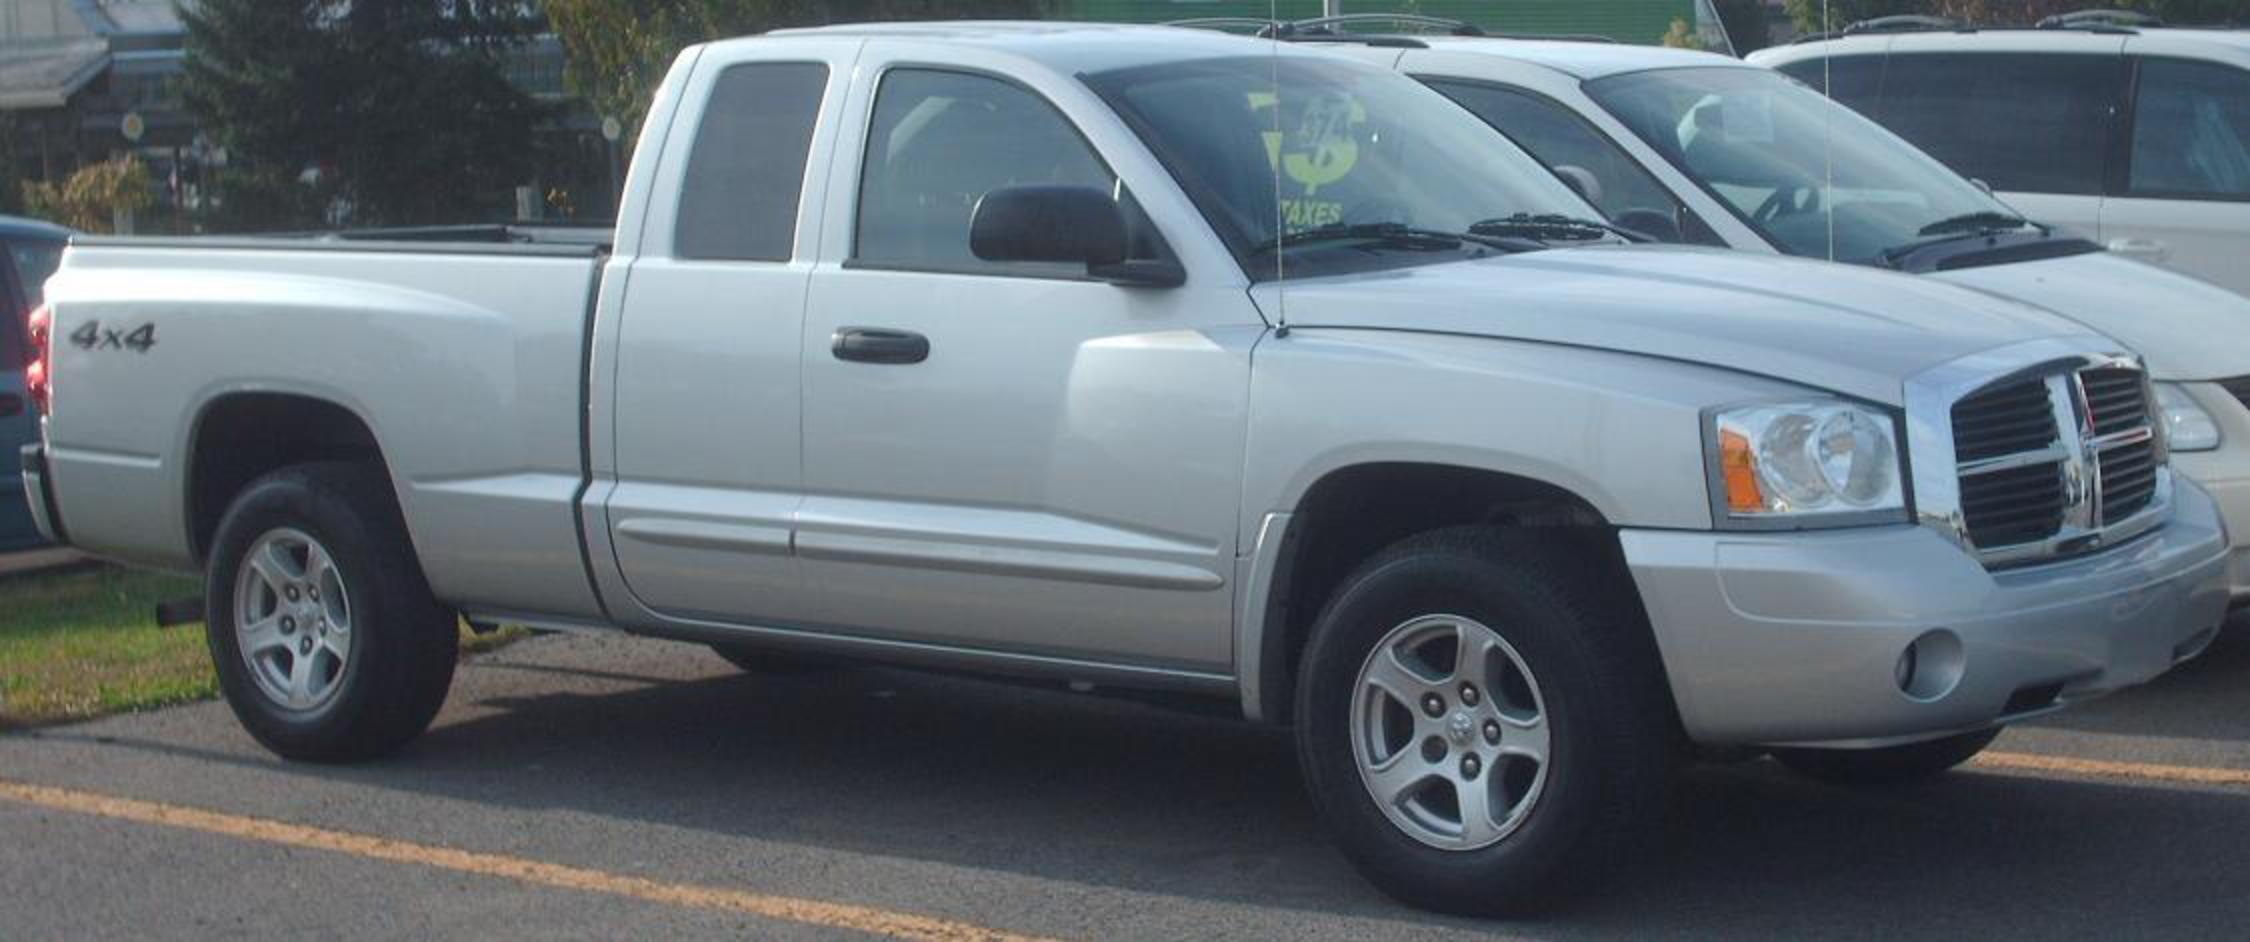 File:2005-07 Dodge Dakota Extended Cab 4x4.jpg